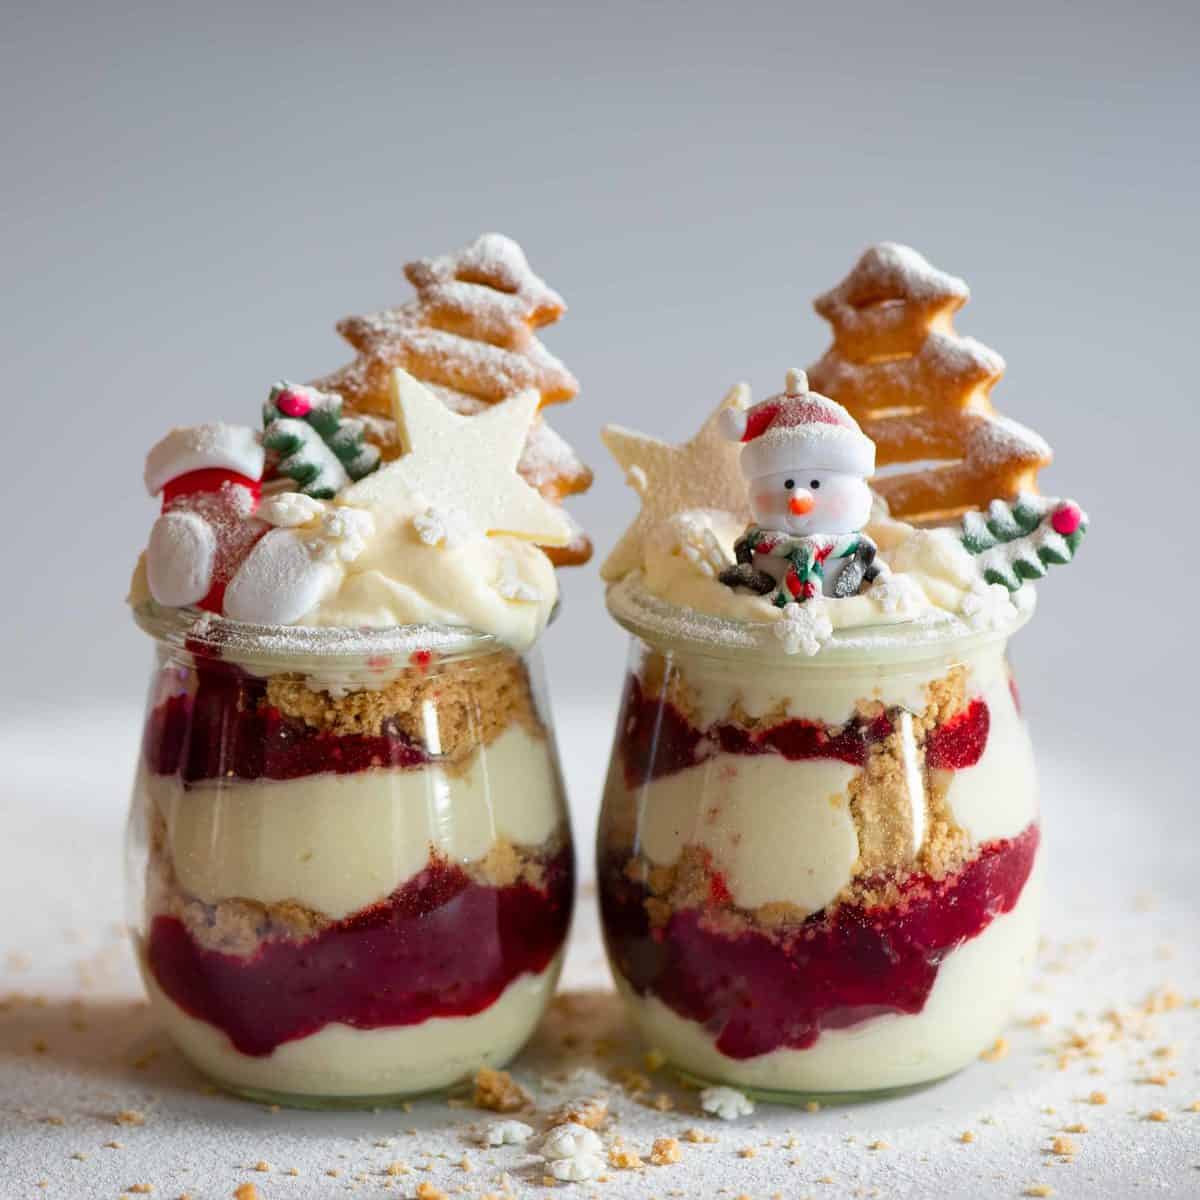 Christmas yogurt parfait with cranberry sauce